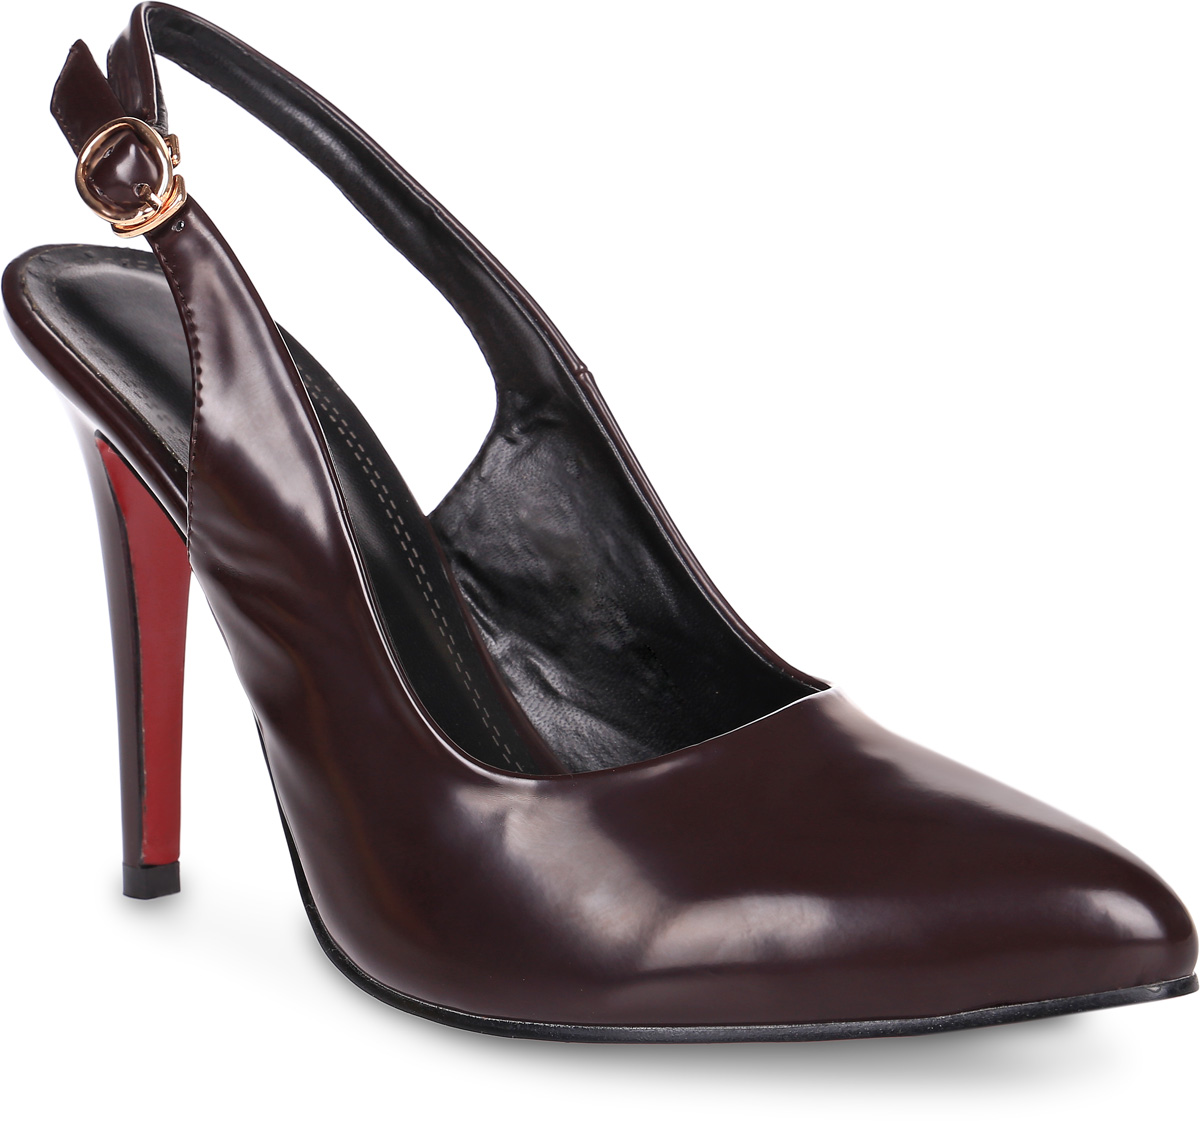 Туфли женские Inario, цвет: коричневый. 17068-01-18. Размер 37